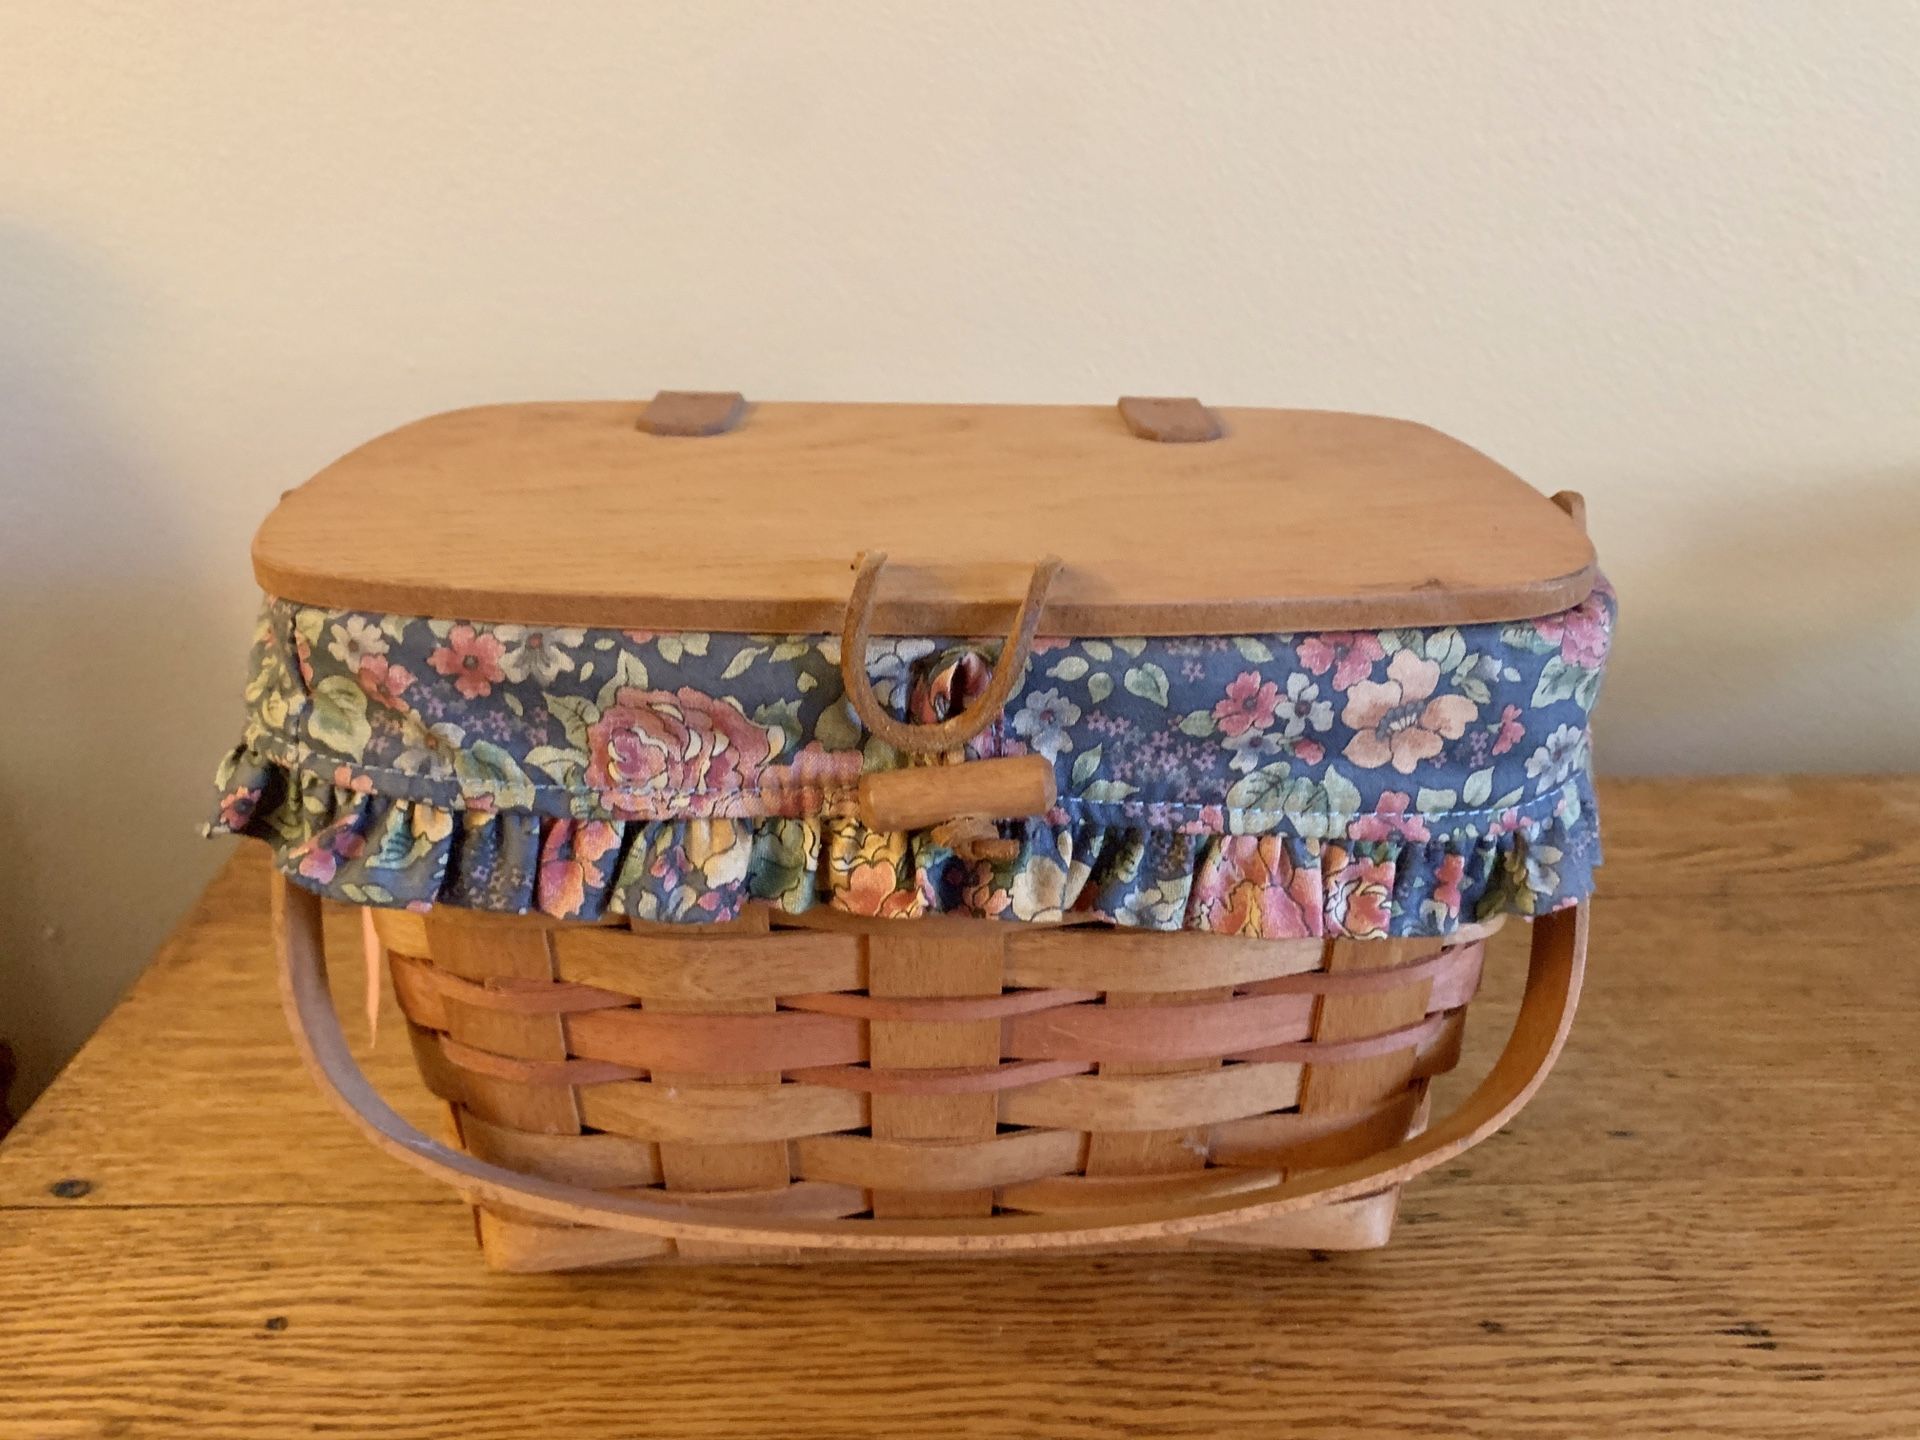 Longaberger Basket with Fabric Liner